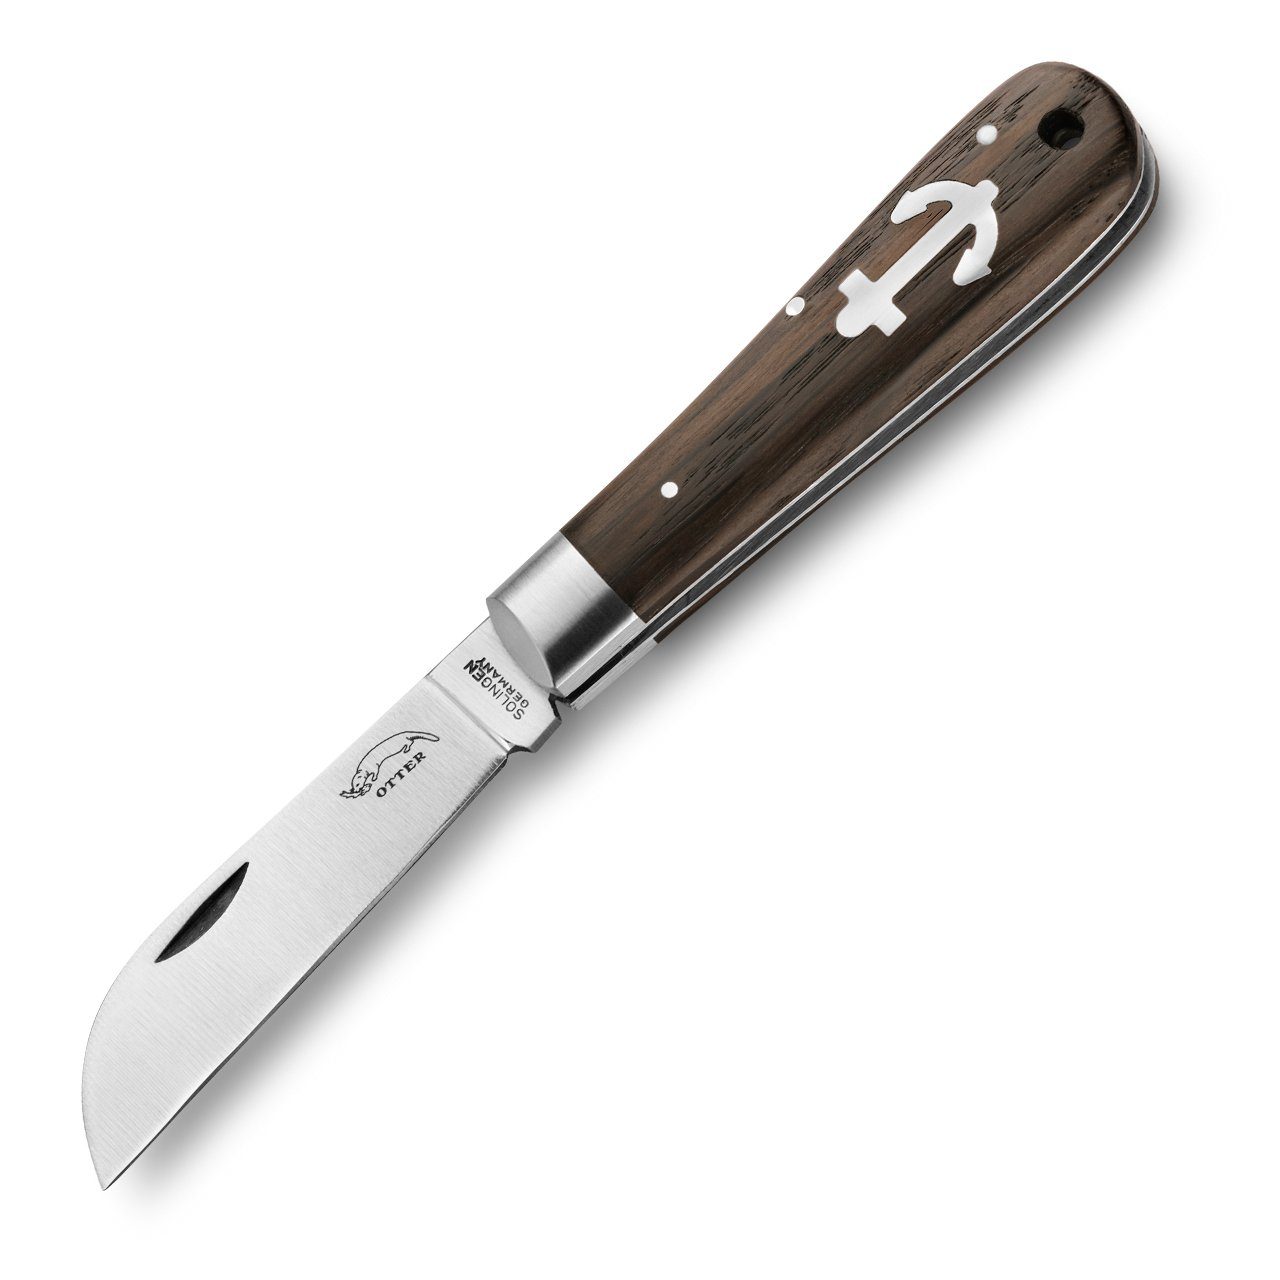 Otter Messer Taschenmesser Anker-Messer groß Räuchereiche Carbonstahlklinge, Slipjoint